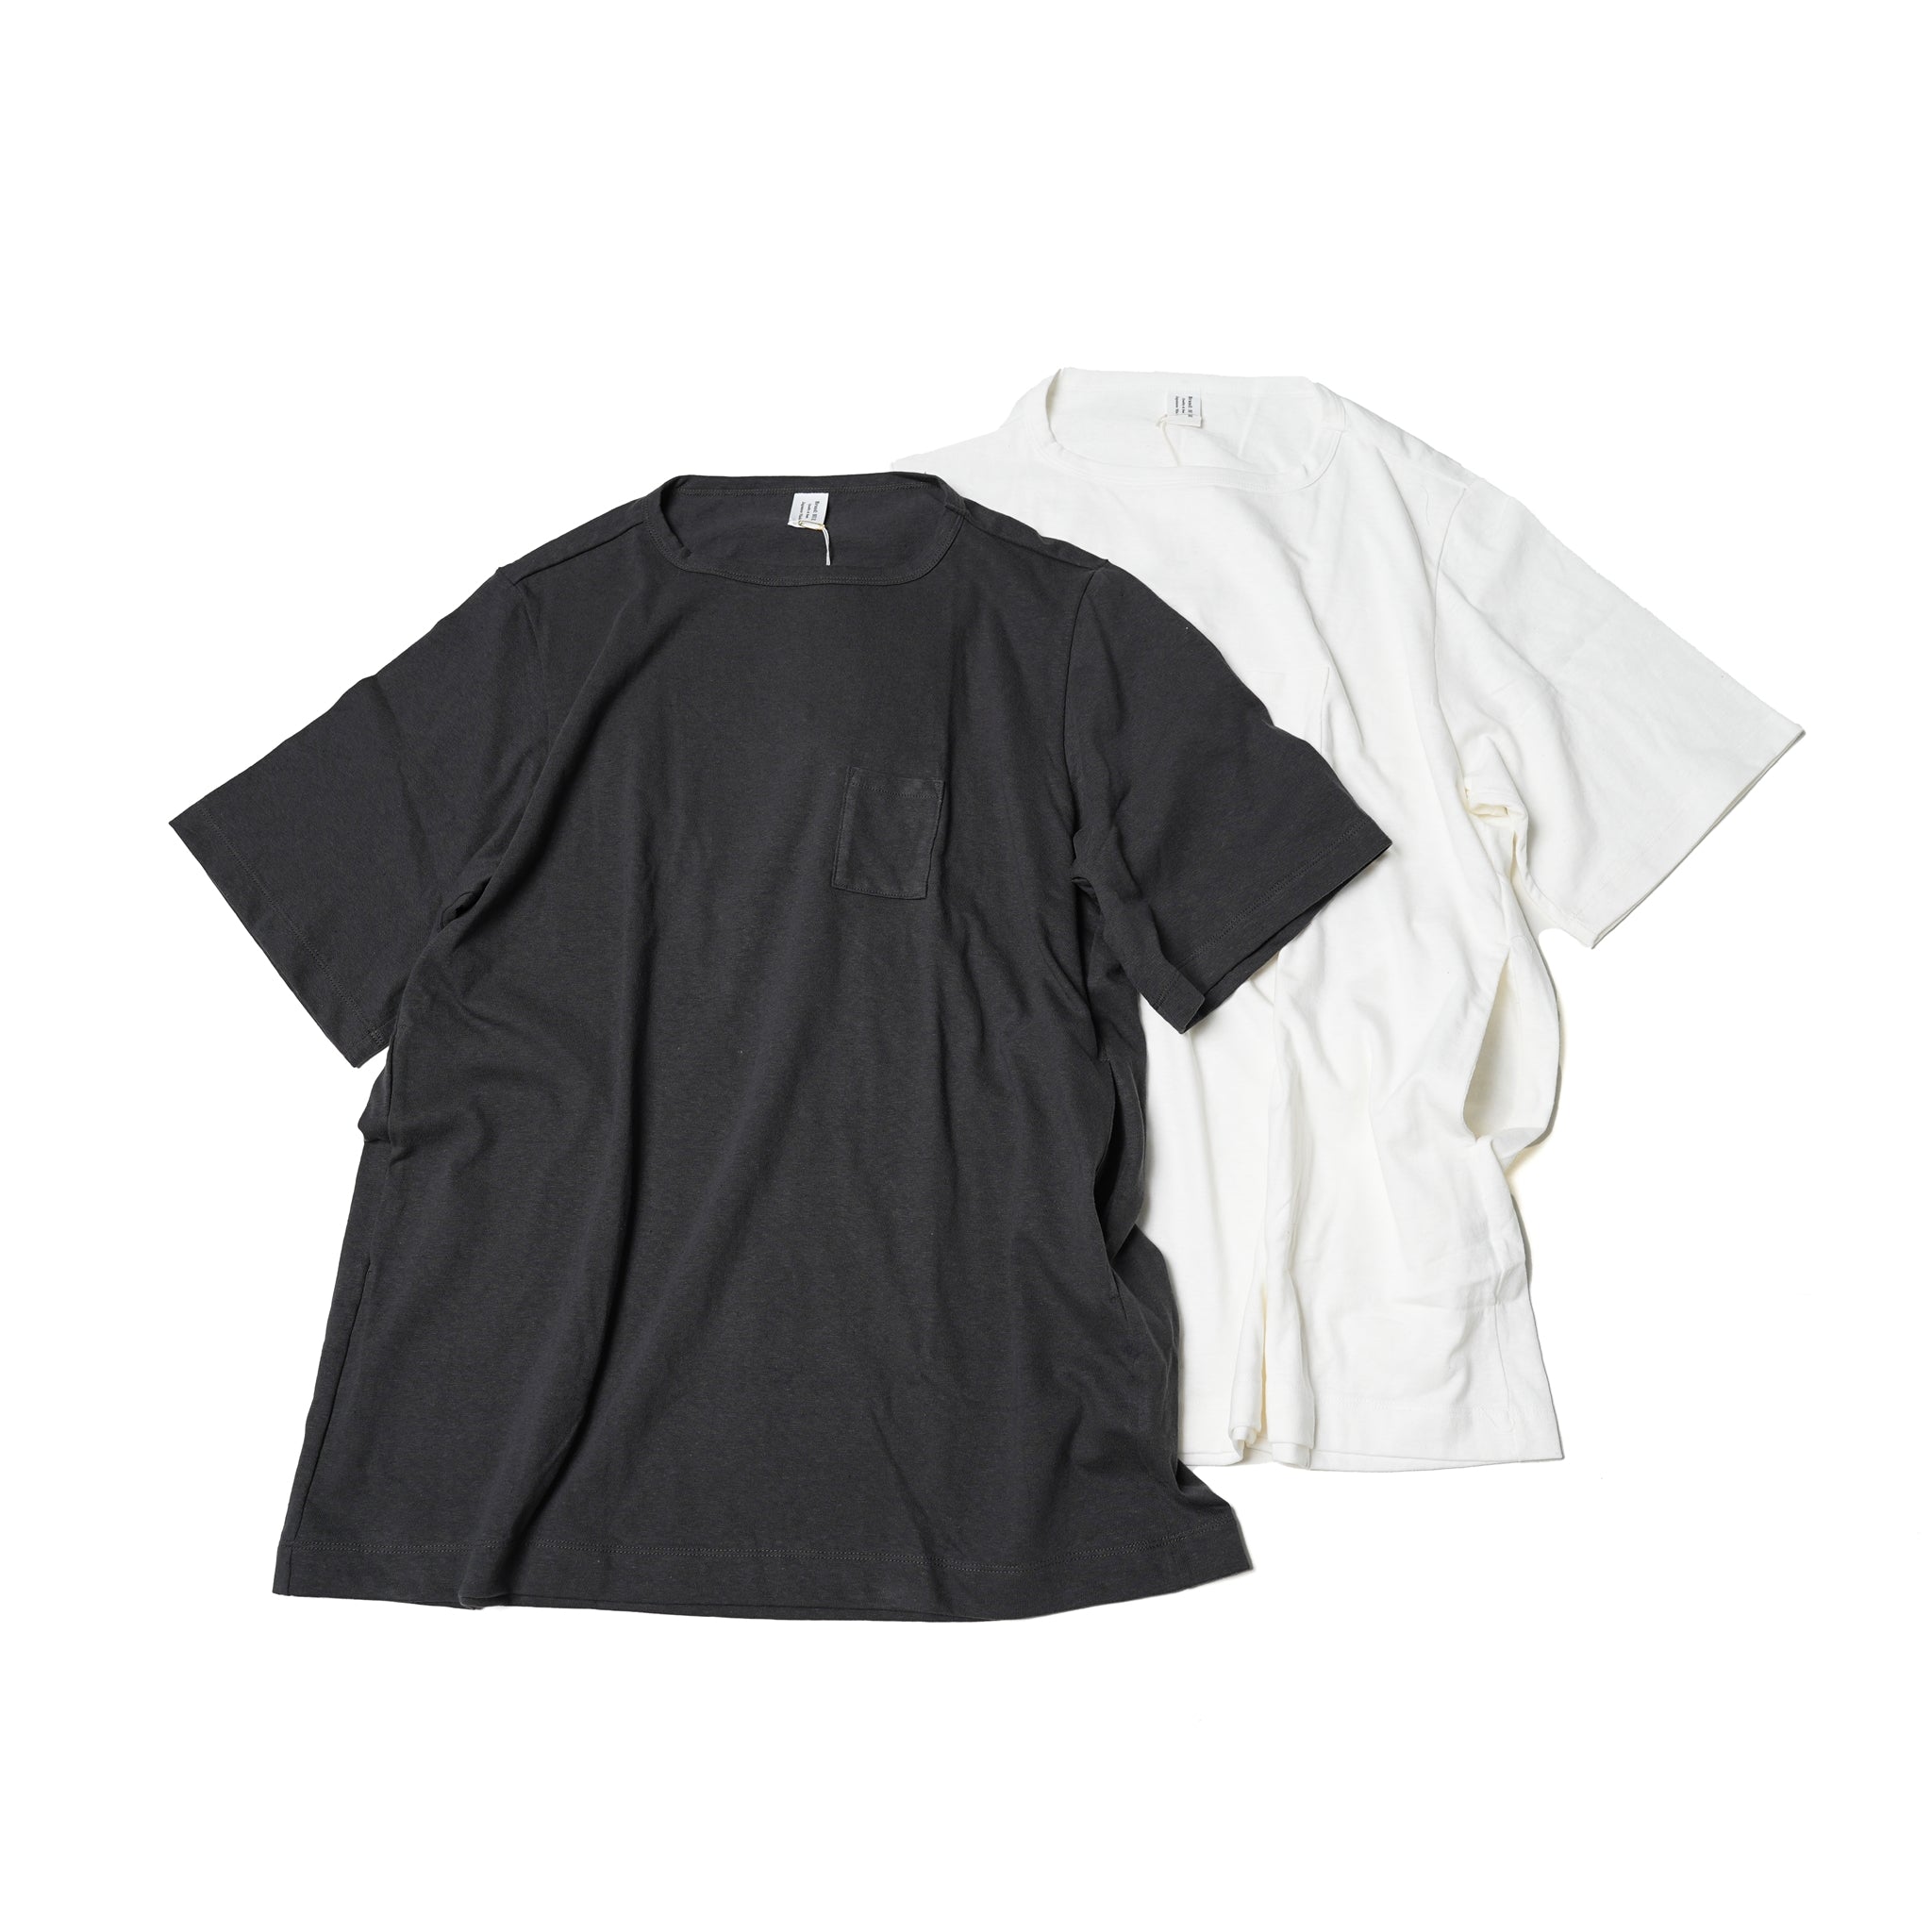 No:HUE-04 | Name:3 Pockets T-Shirt / Middle Length | Color:White/Black | Size:Free【Big P Product】【ネコポス選択可能】